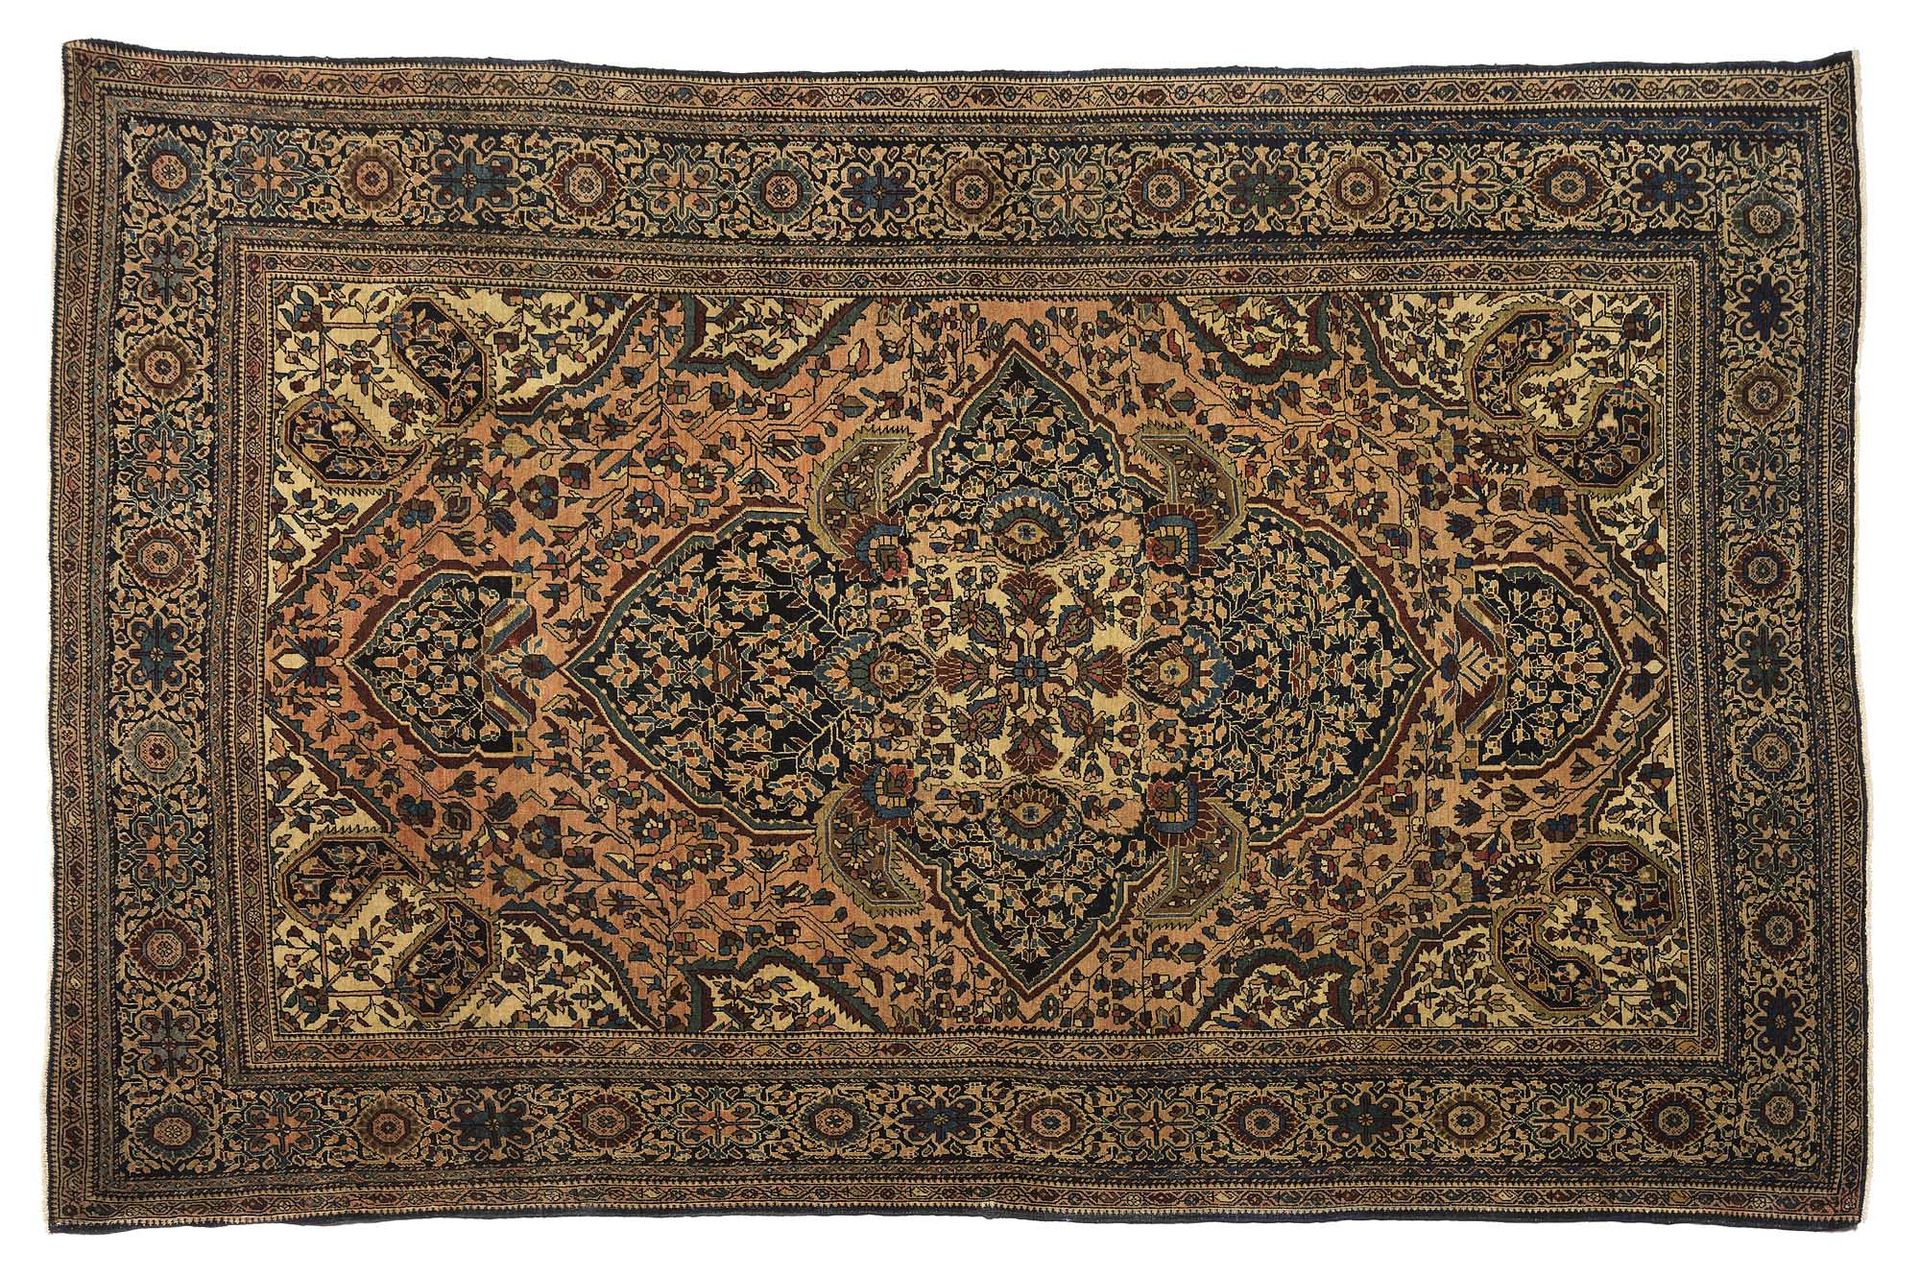 Null Tapis SAROUK (Perse), fin du 19e siècle

Dimensions : 192 x 121cm

Caractér&hellip;